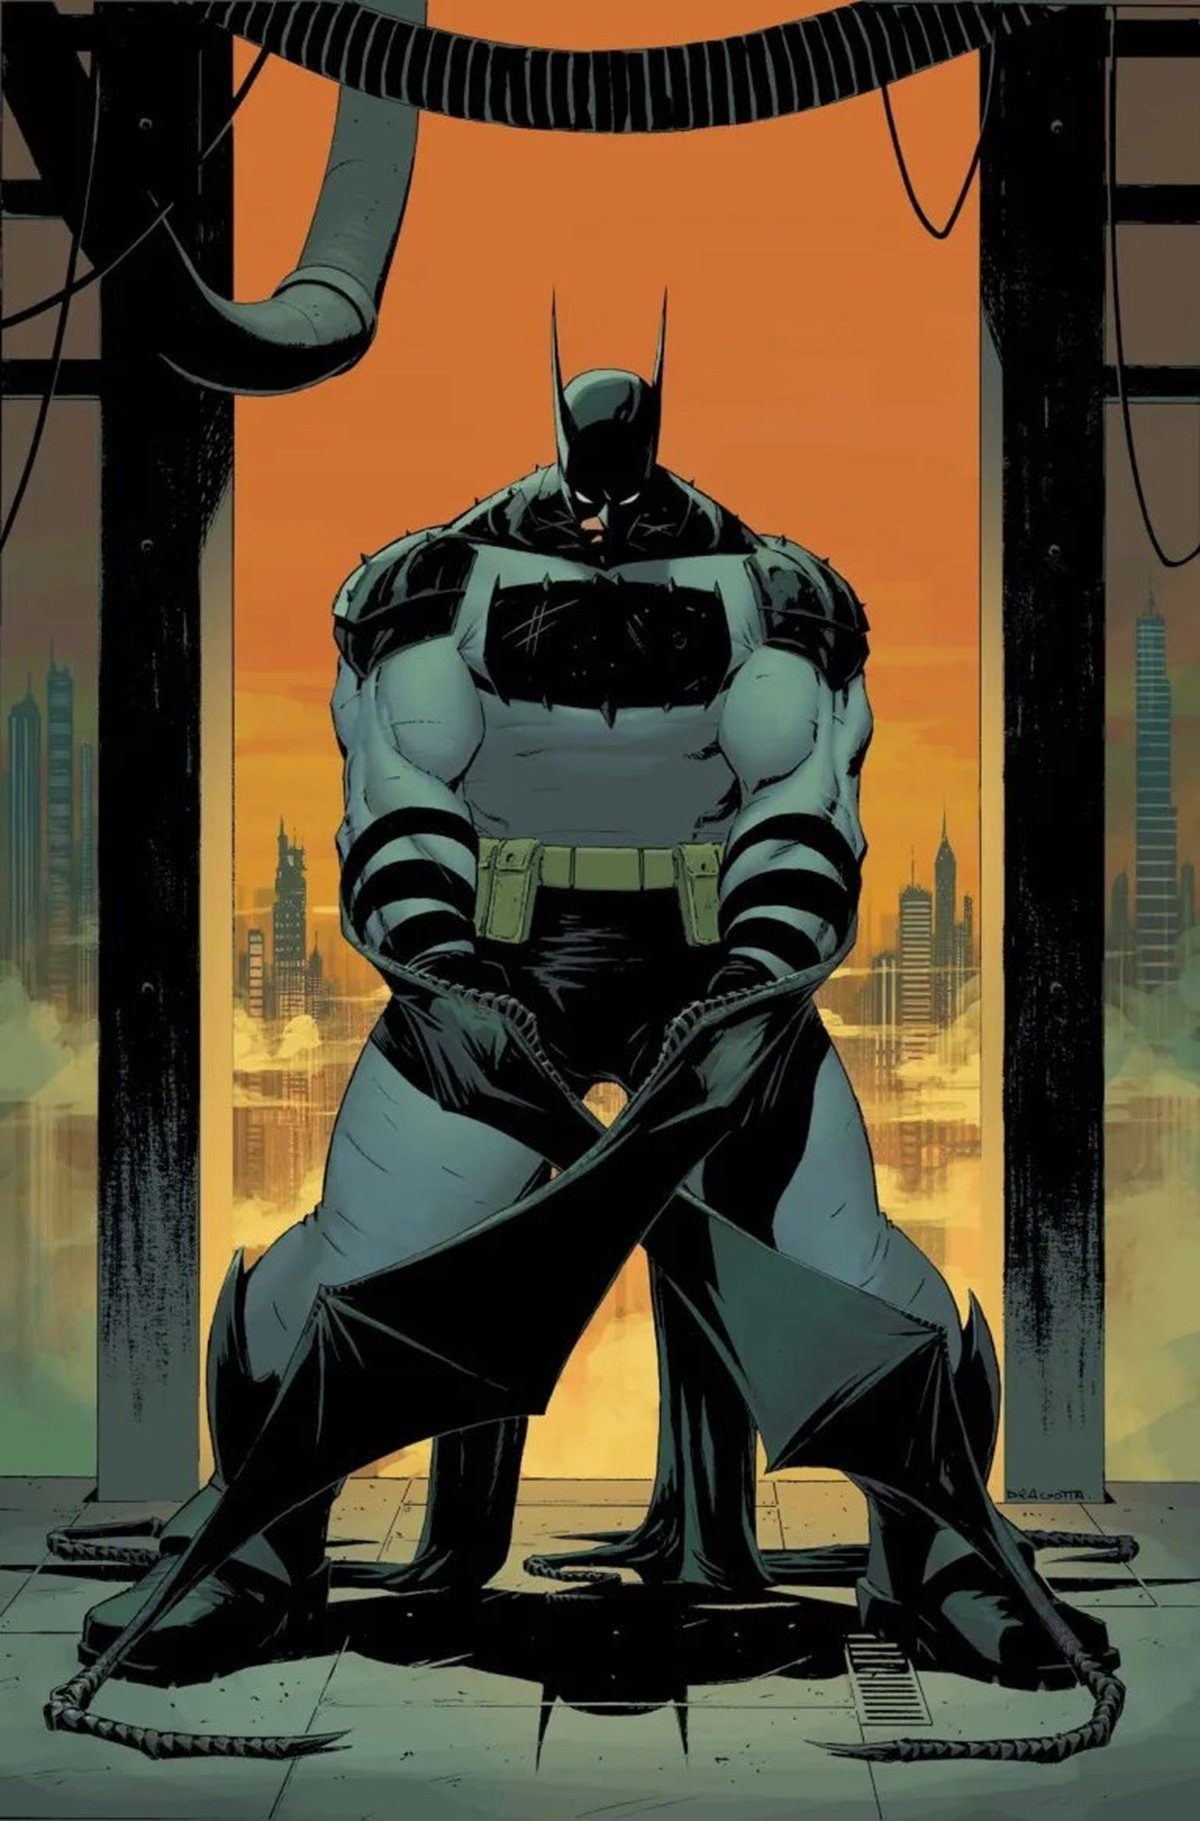 Absolute Batman cover by Nick Dragotta.